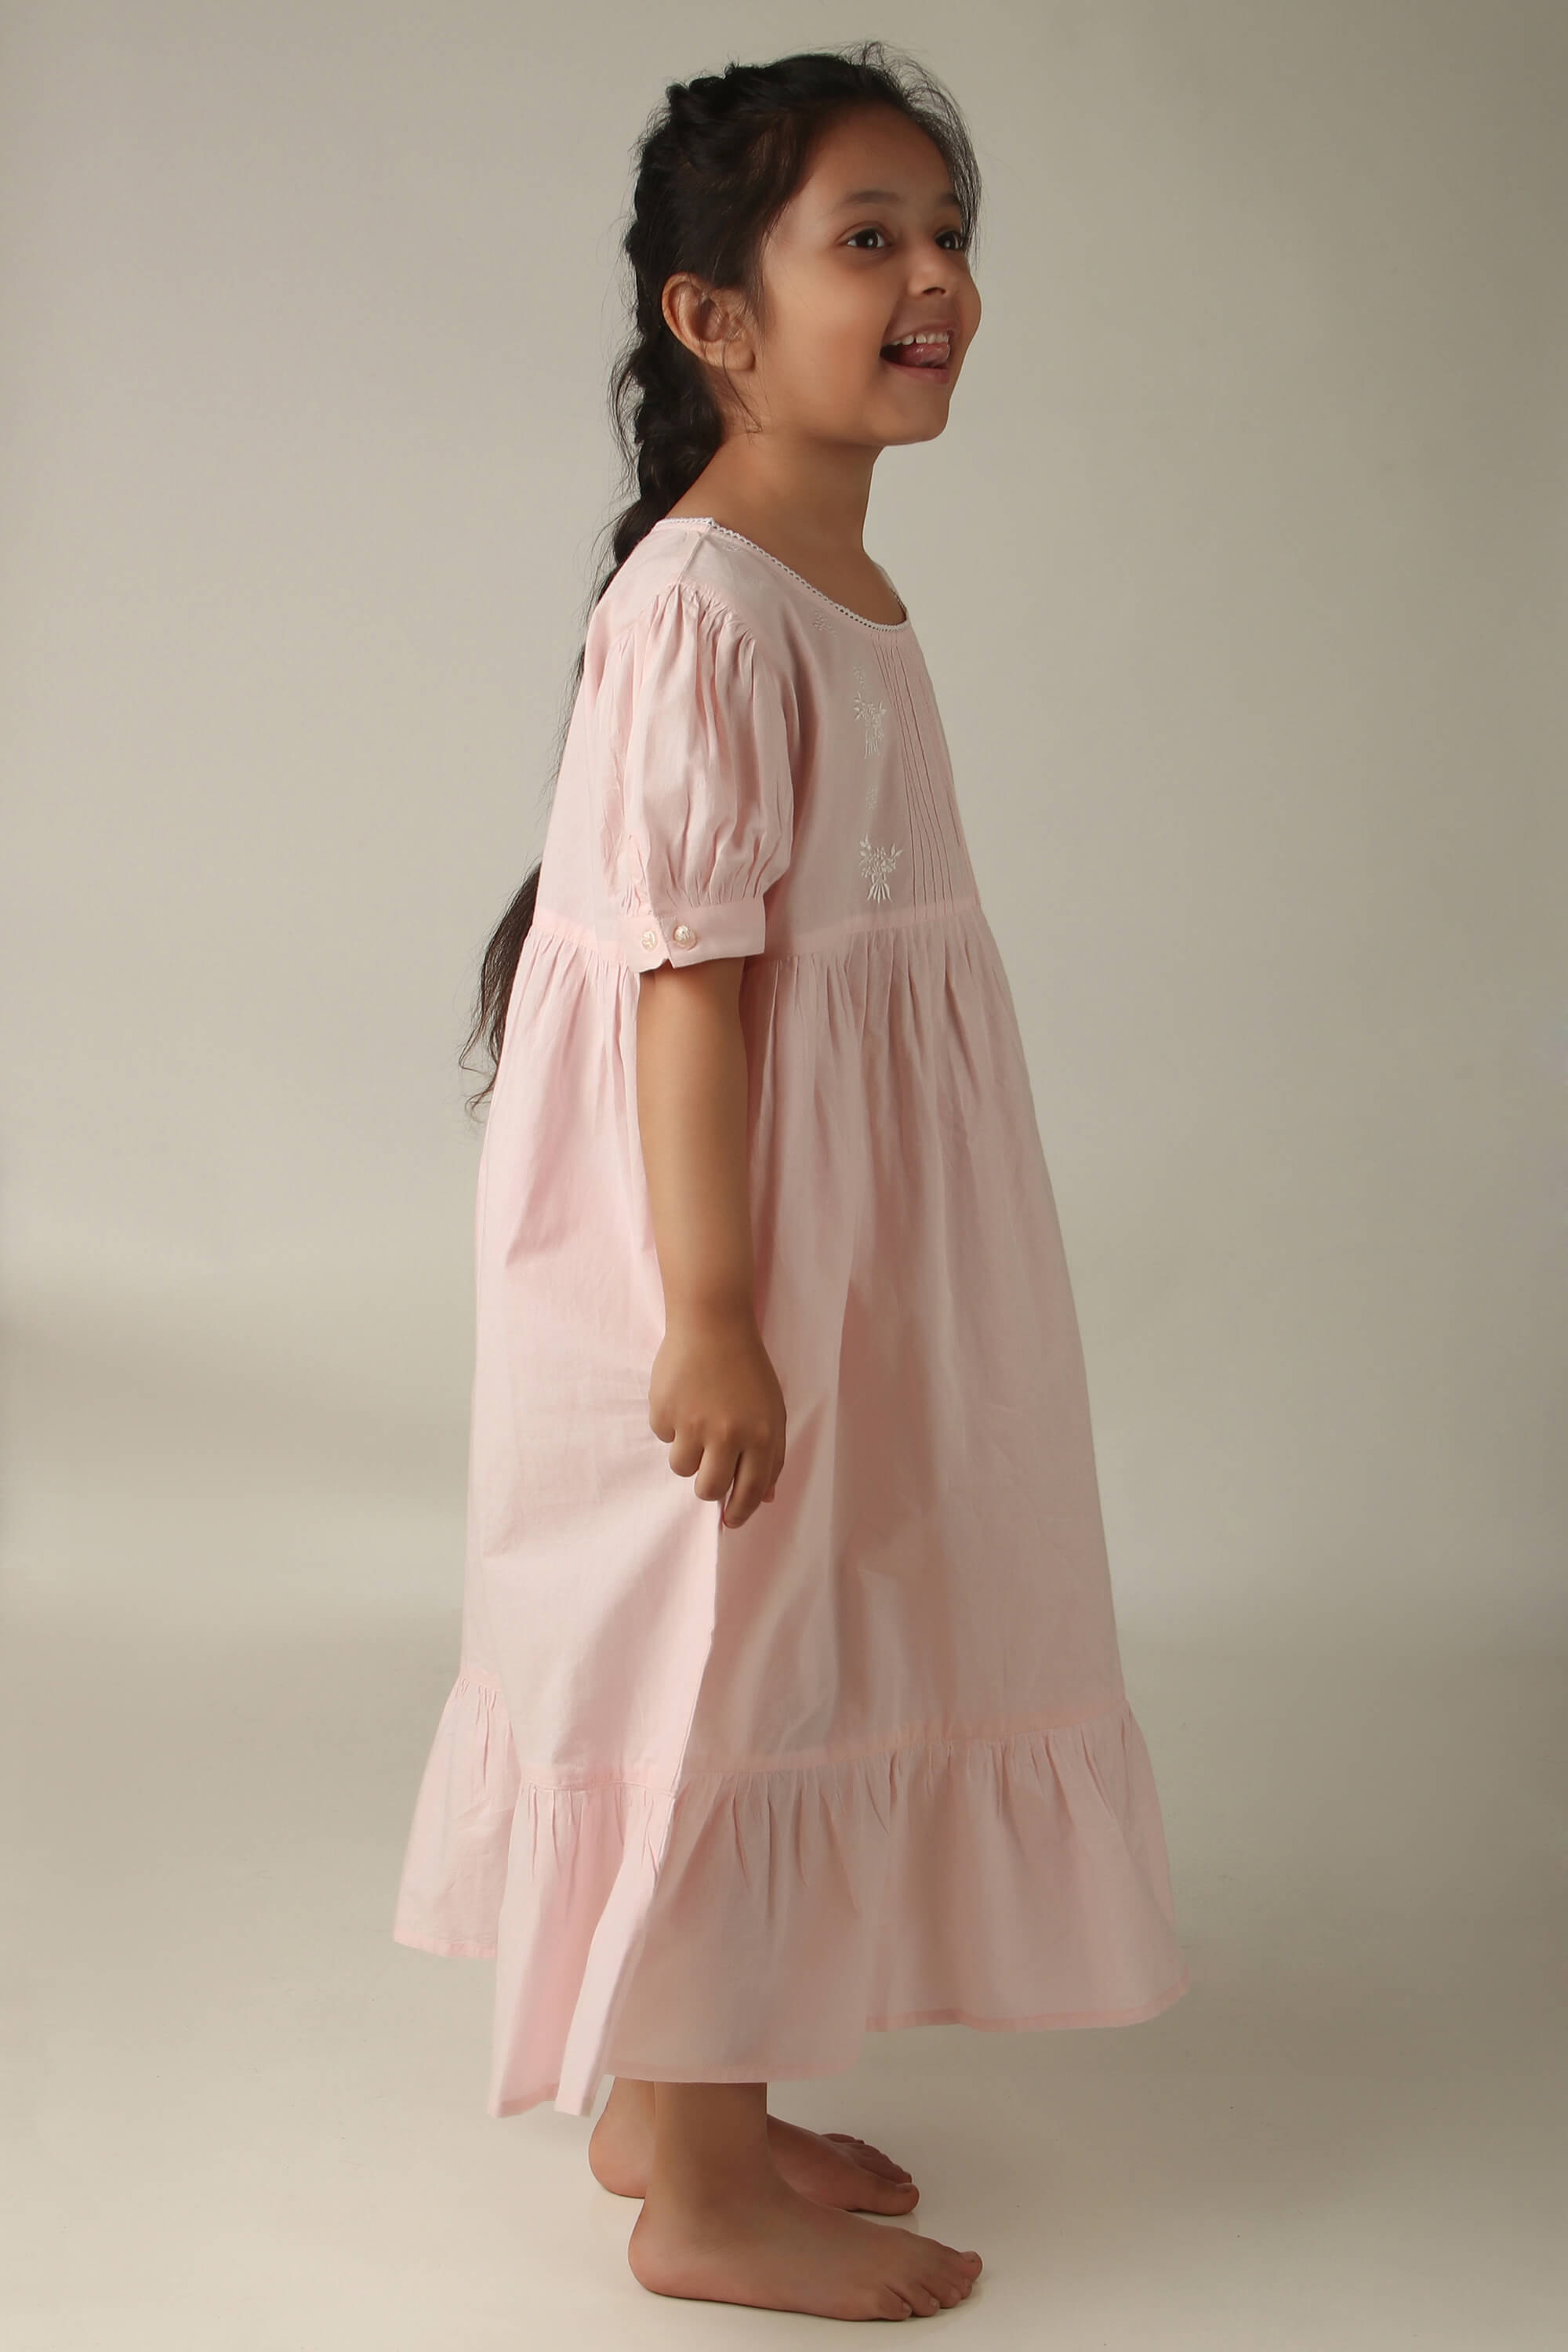 742 INR - Short Nighty For Women - Printed Night Dress - Cotton Nightwear  Gown